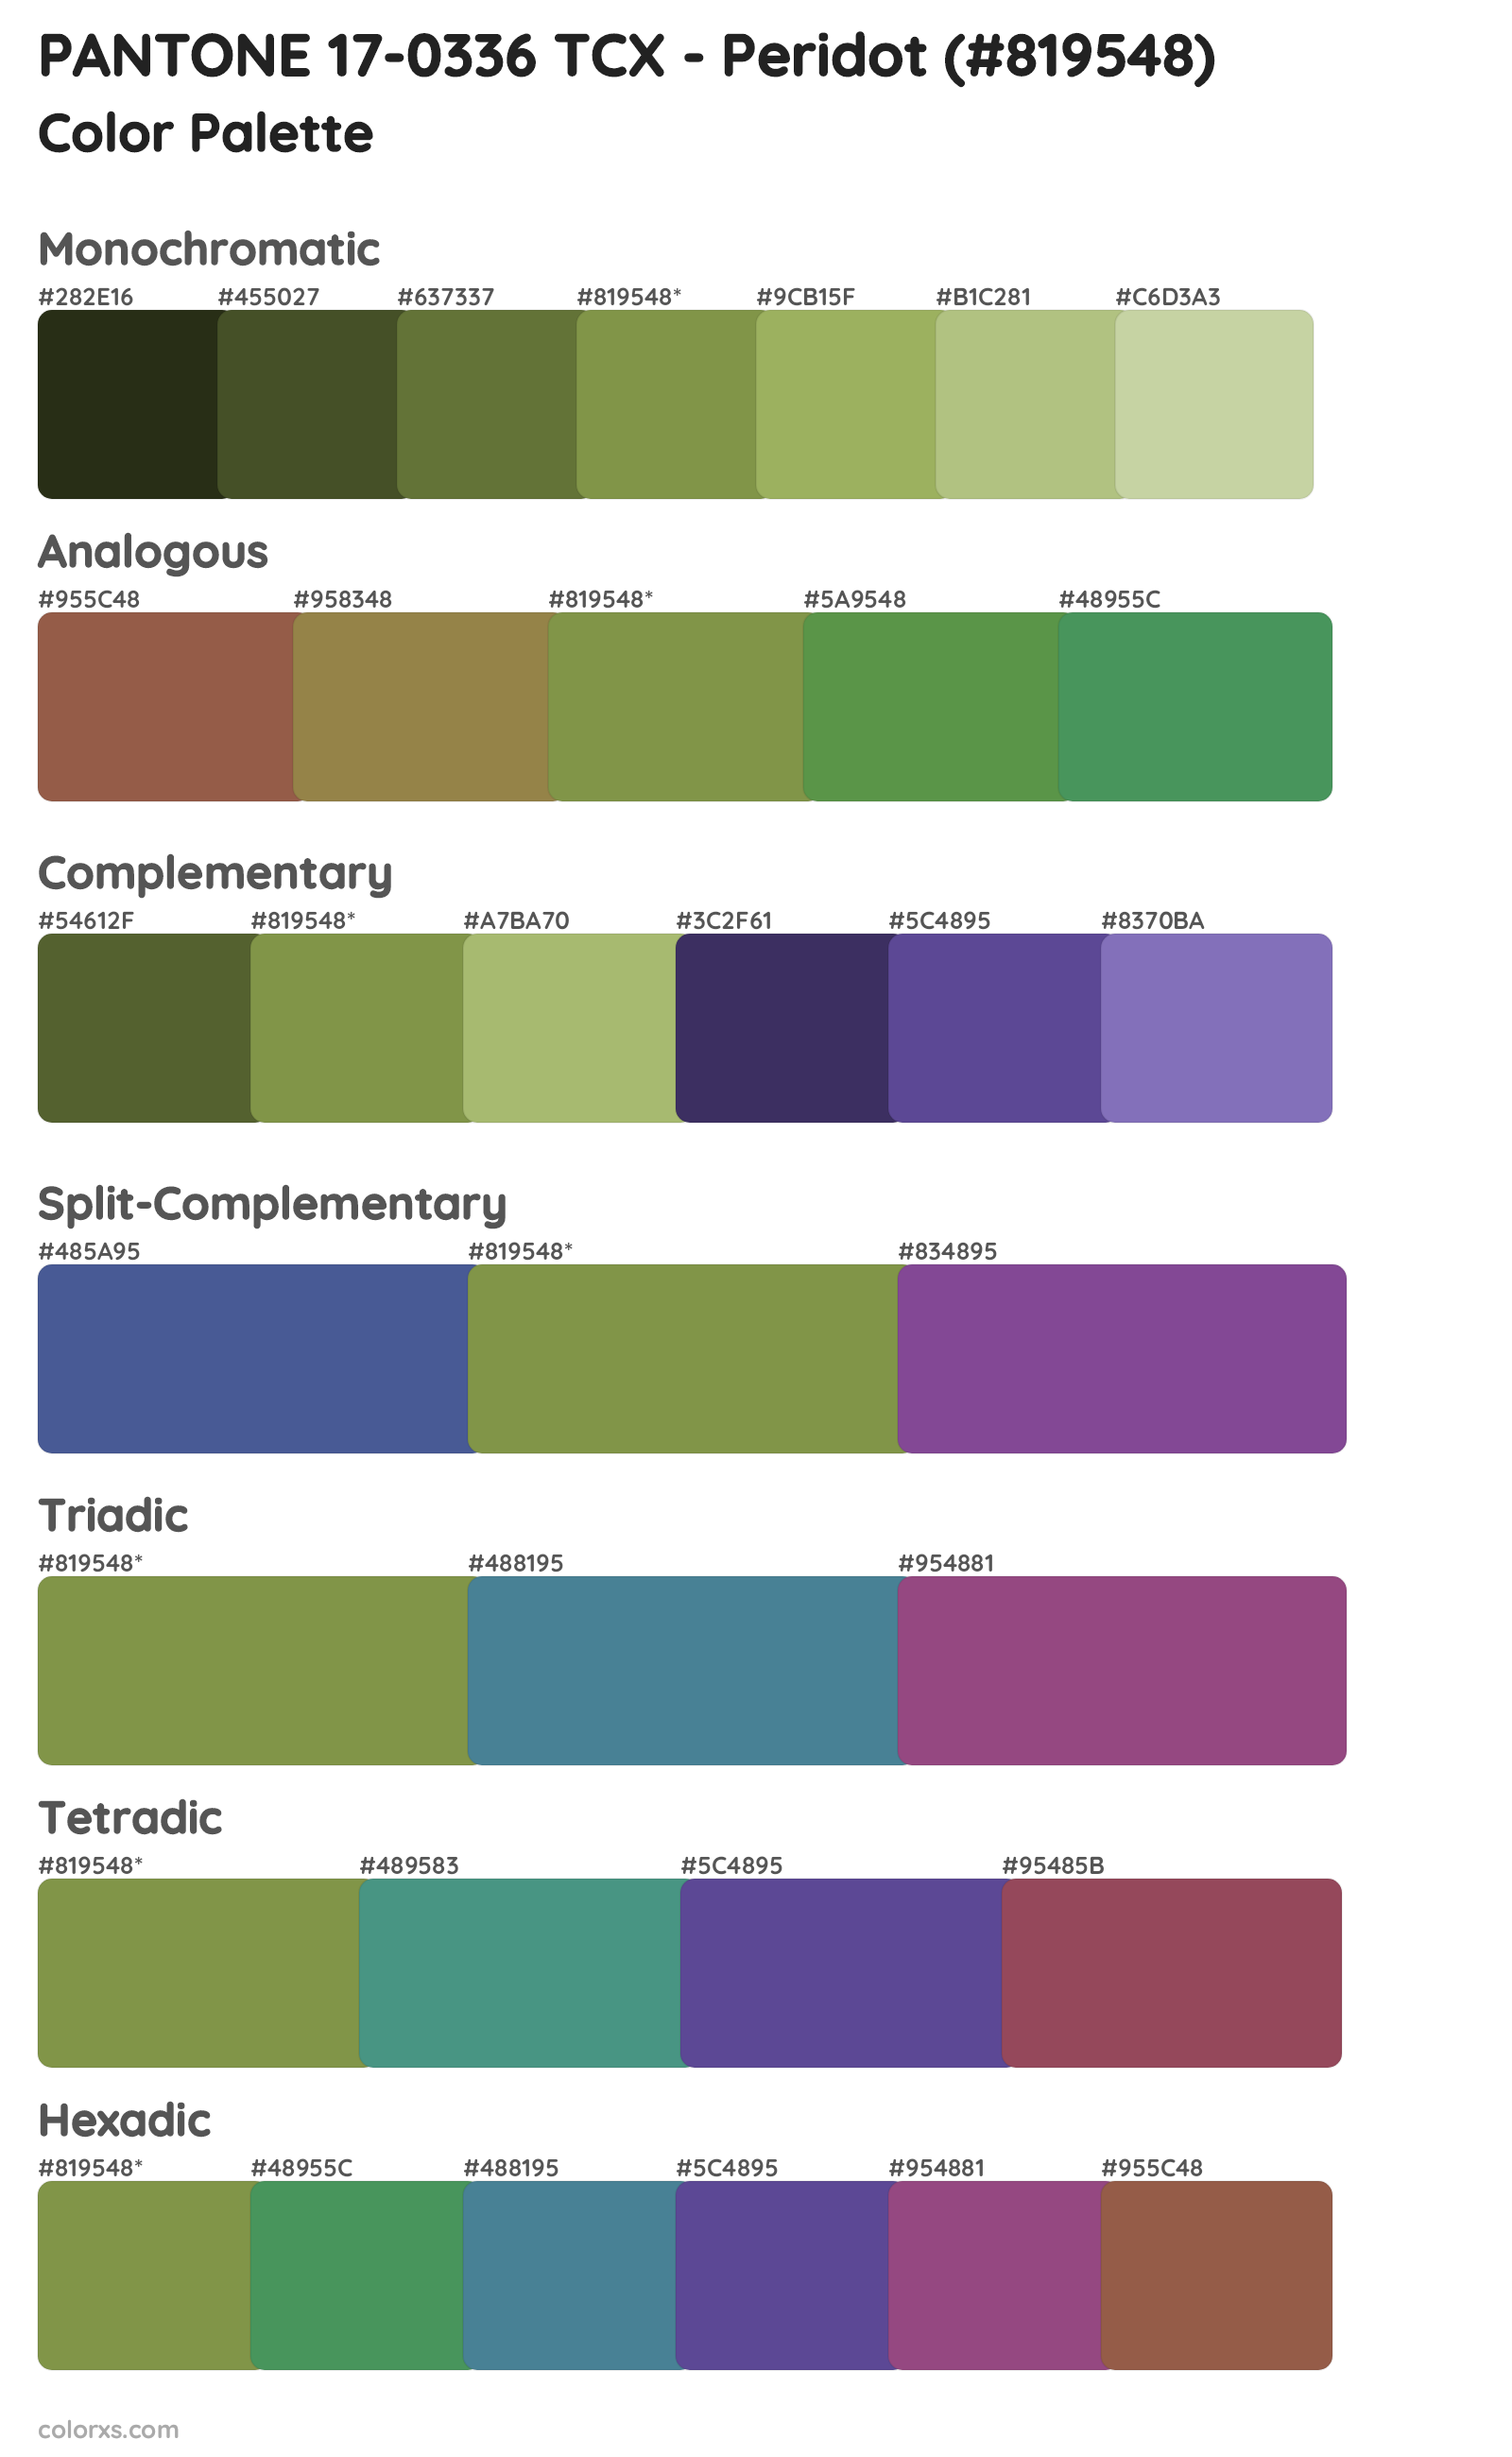 PANTONE 17-0336 TCX - Peridot Color Scheme Palettes